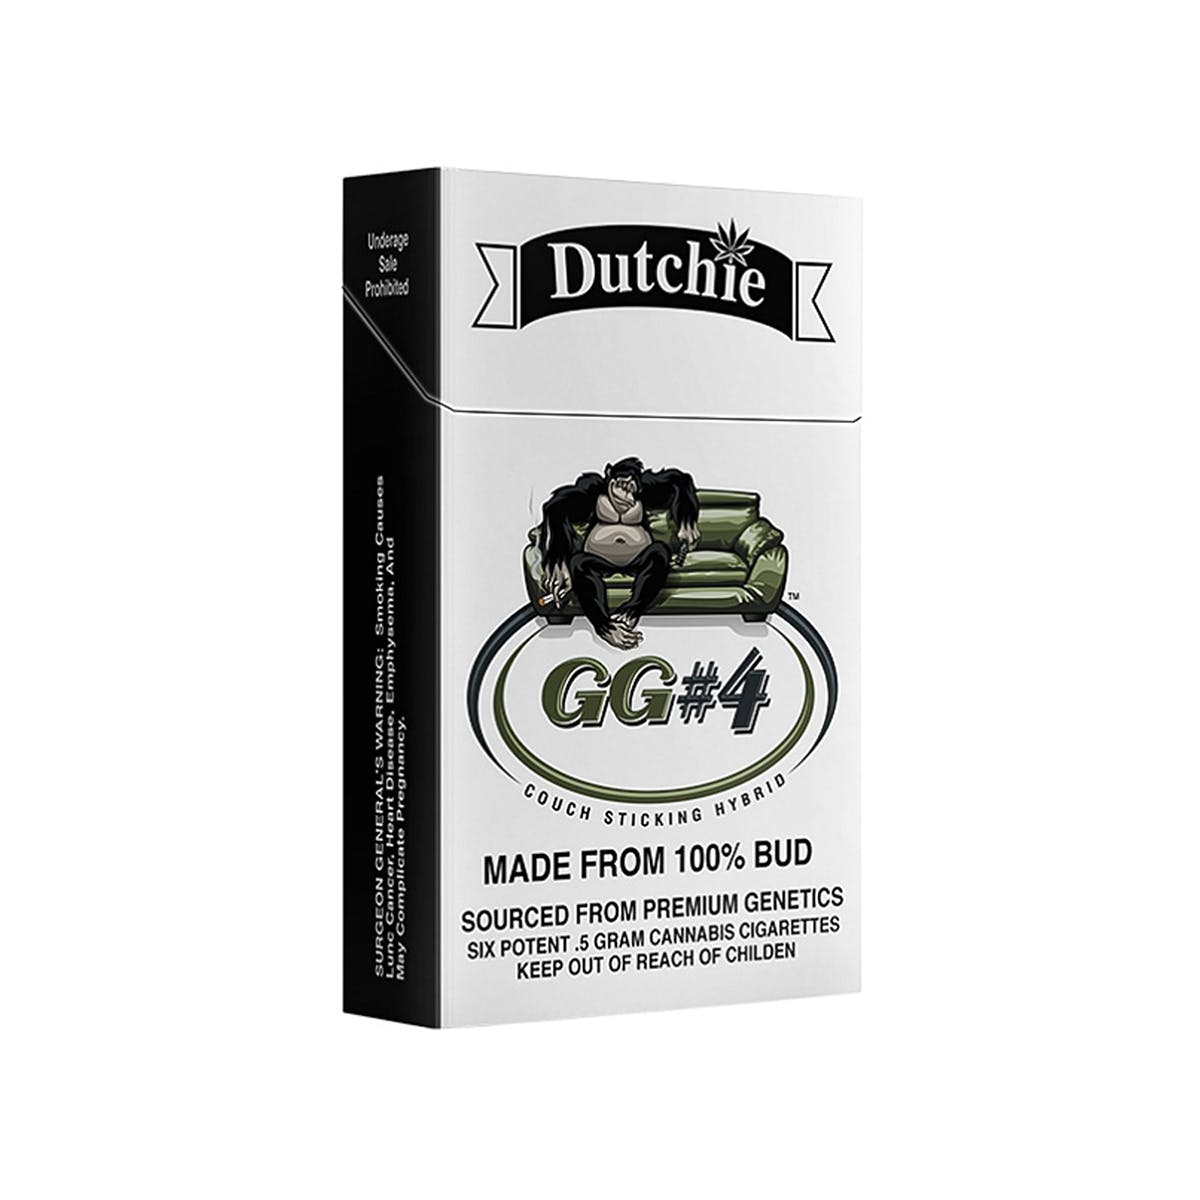 marijuana-dispensaries-harvest-of-baseline-in-guadalupe-gg-234-dutchie